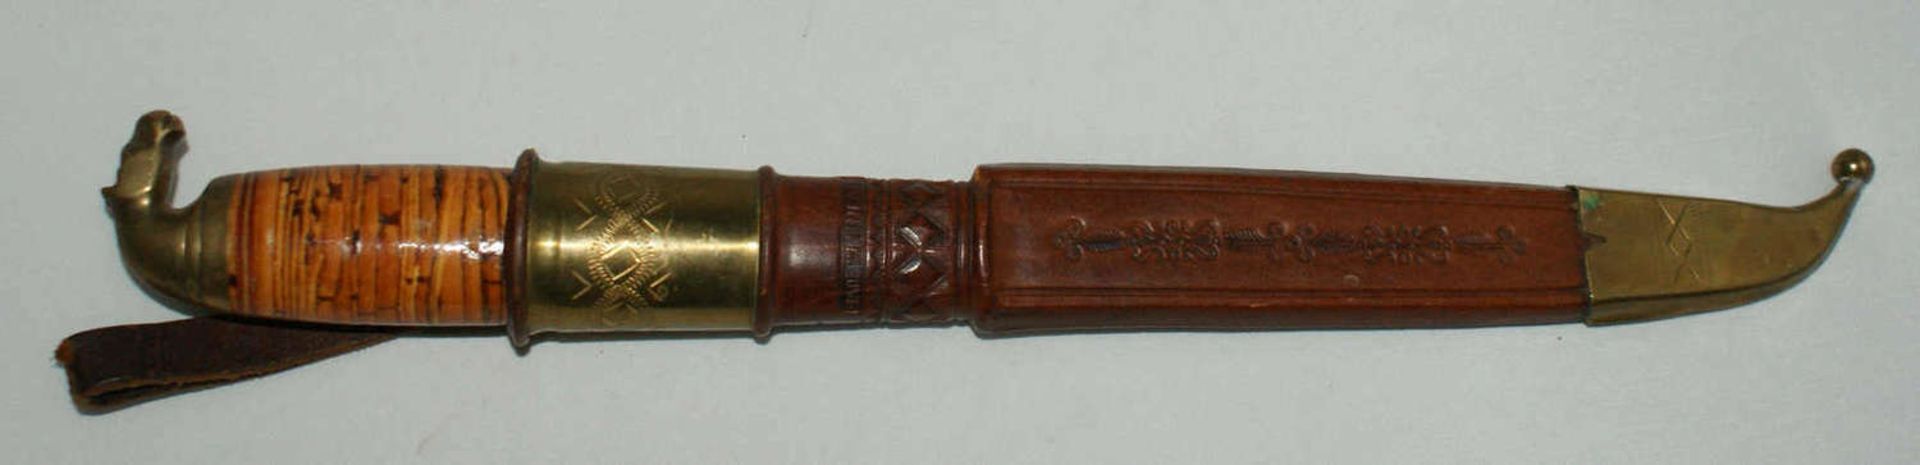 Fa. JisaRR Järvenpää Finnland, Jagdmesser mit Pferdekopf im Original Lederetui. Gesamtlänge 27 cm,